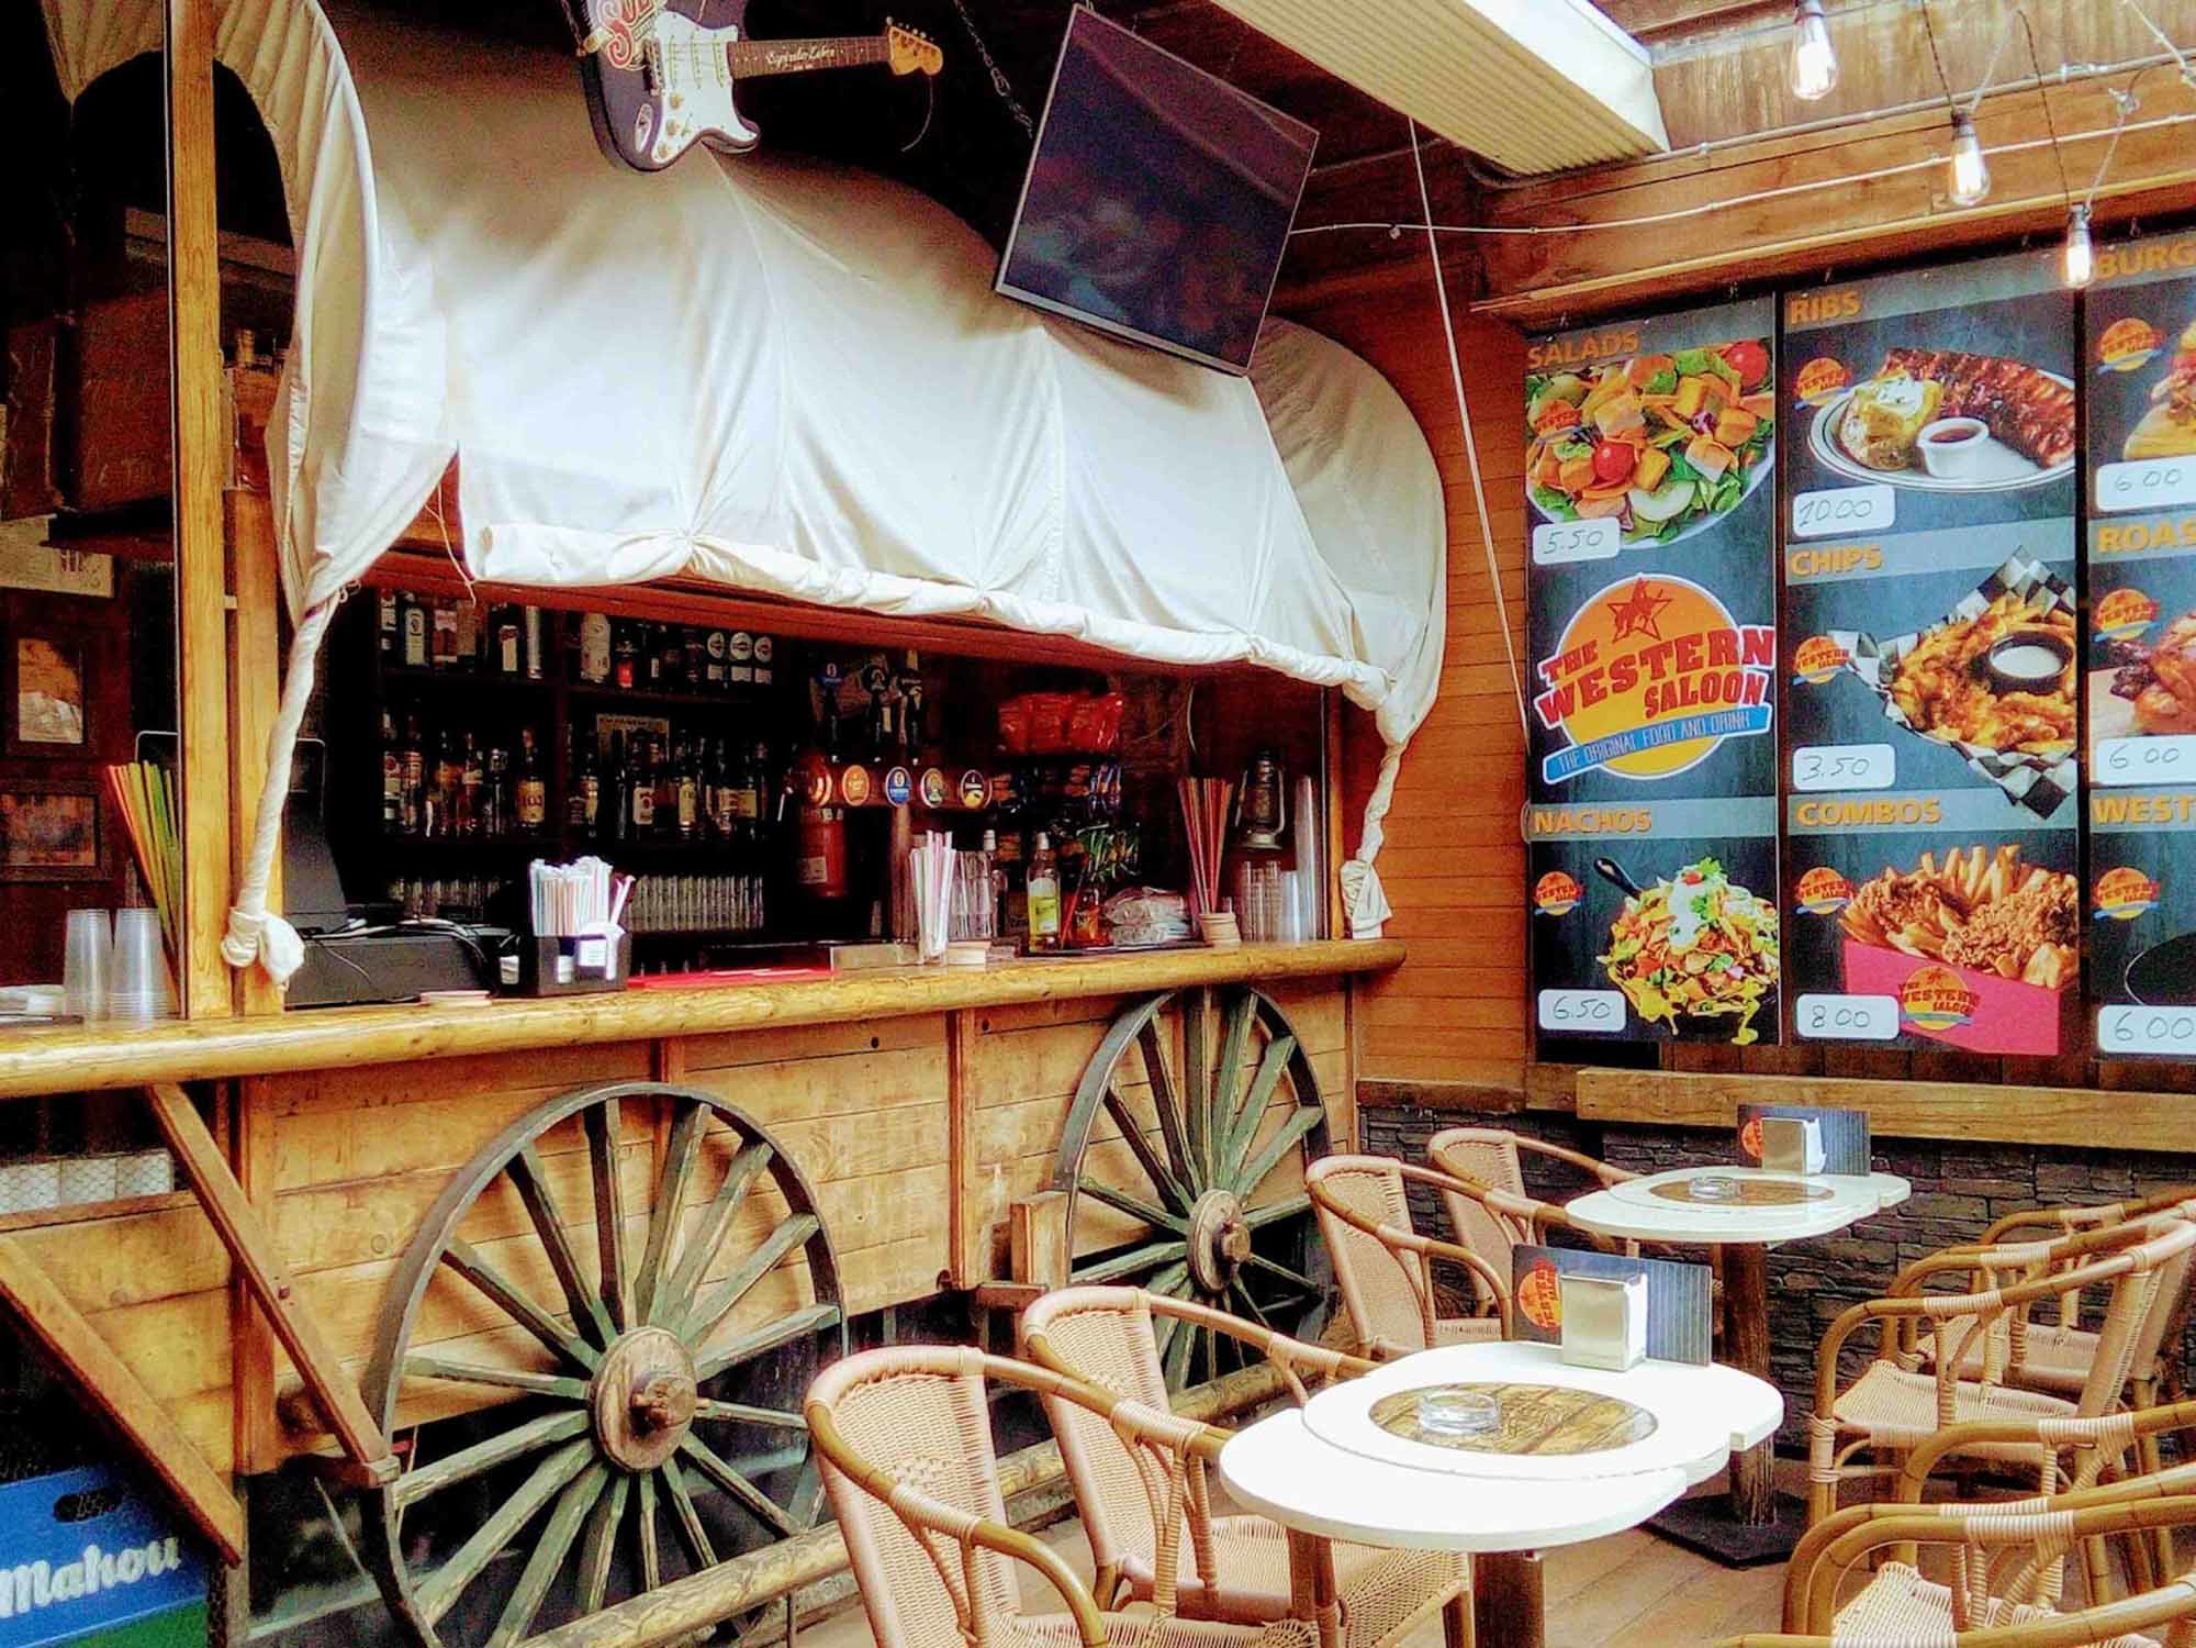 Western Saloon - Best Bars in Benidorm